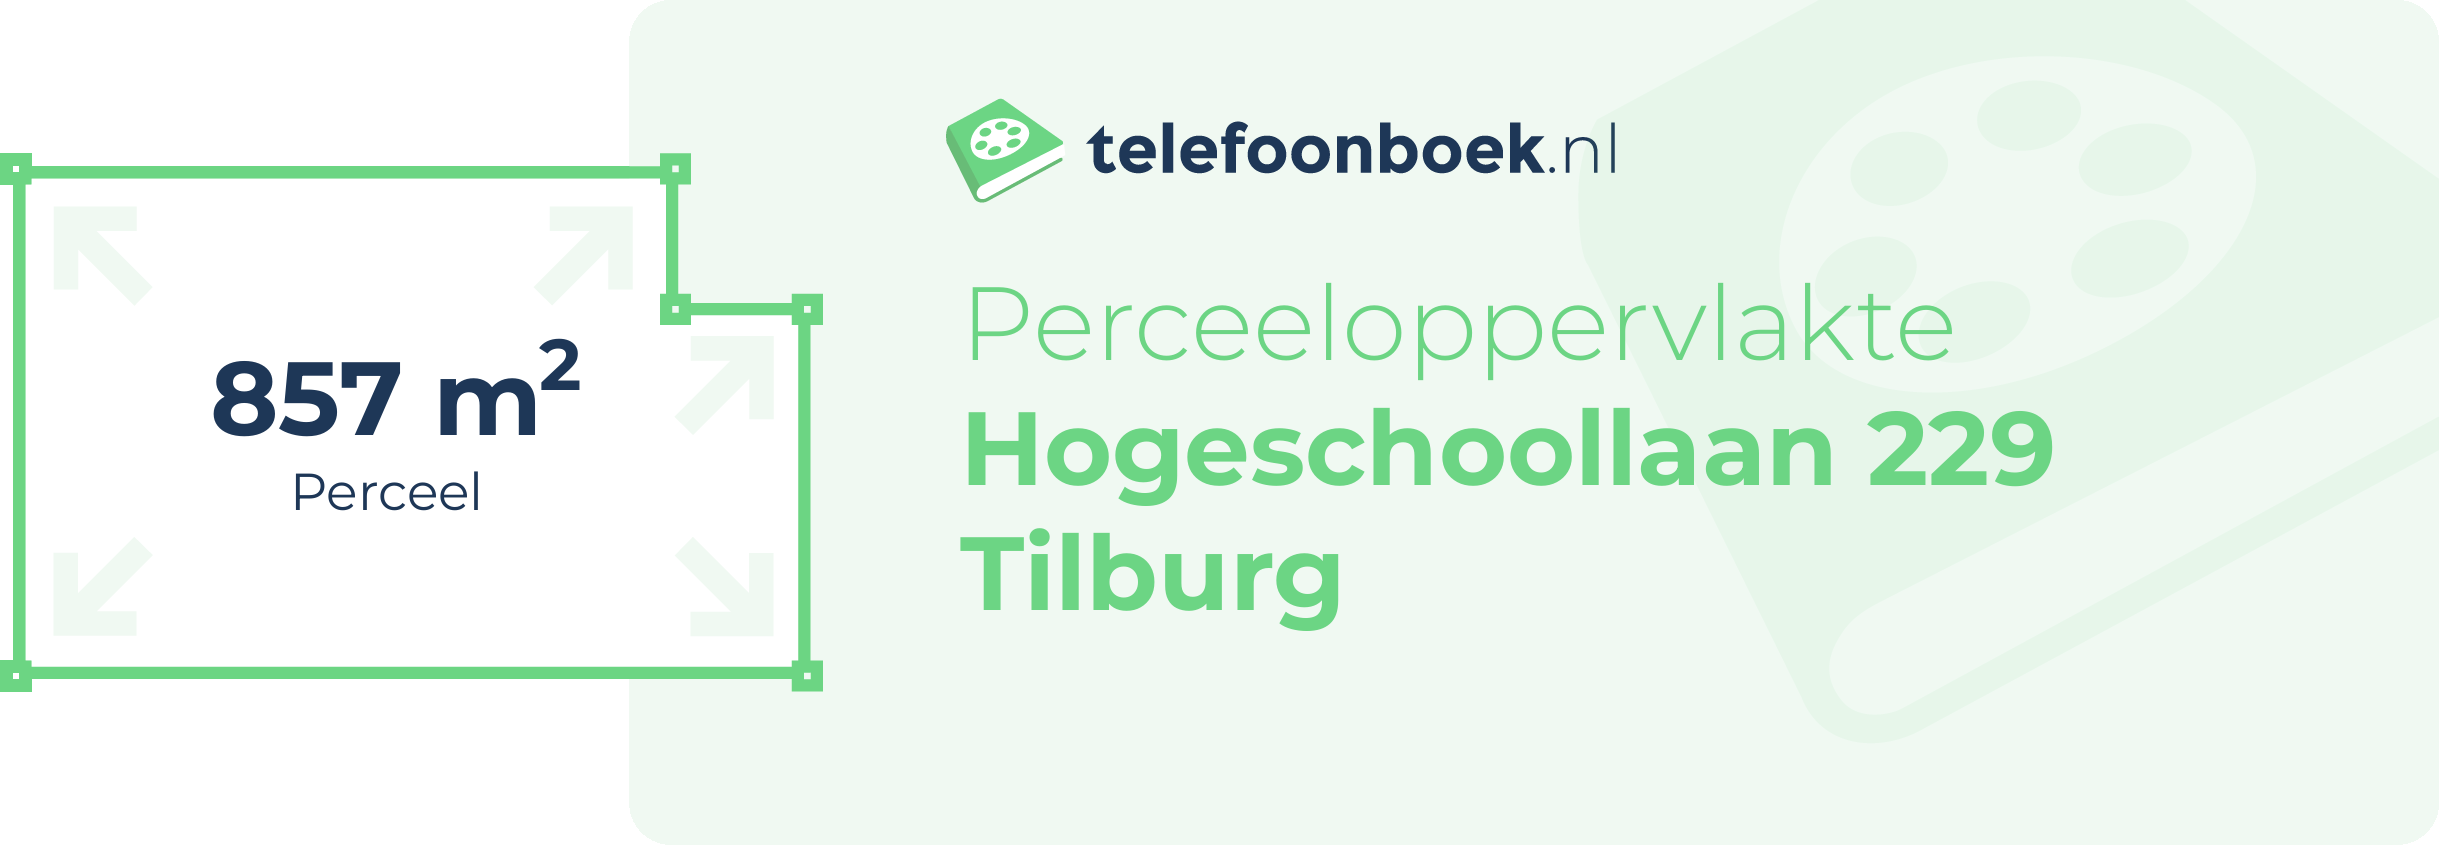 Perceeloppervlakte Hogeschoollaan 229 Tilburg